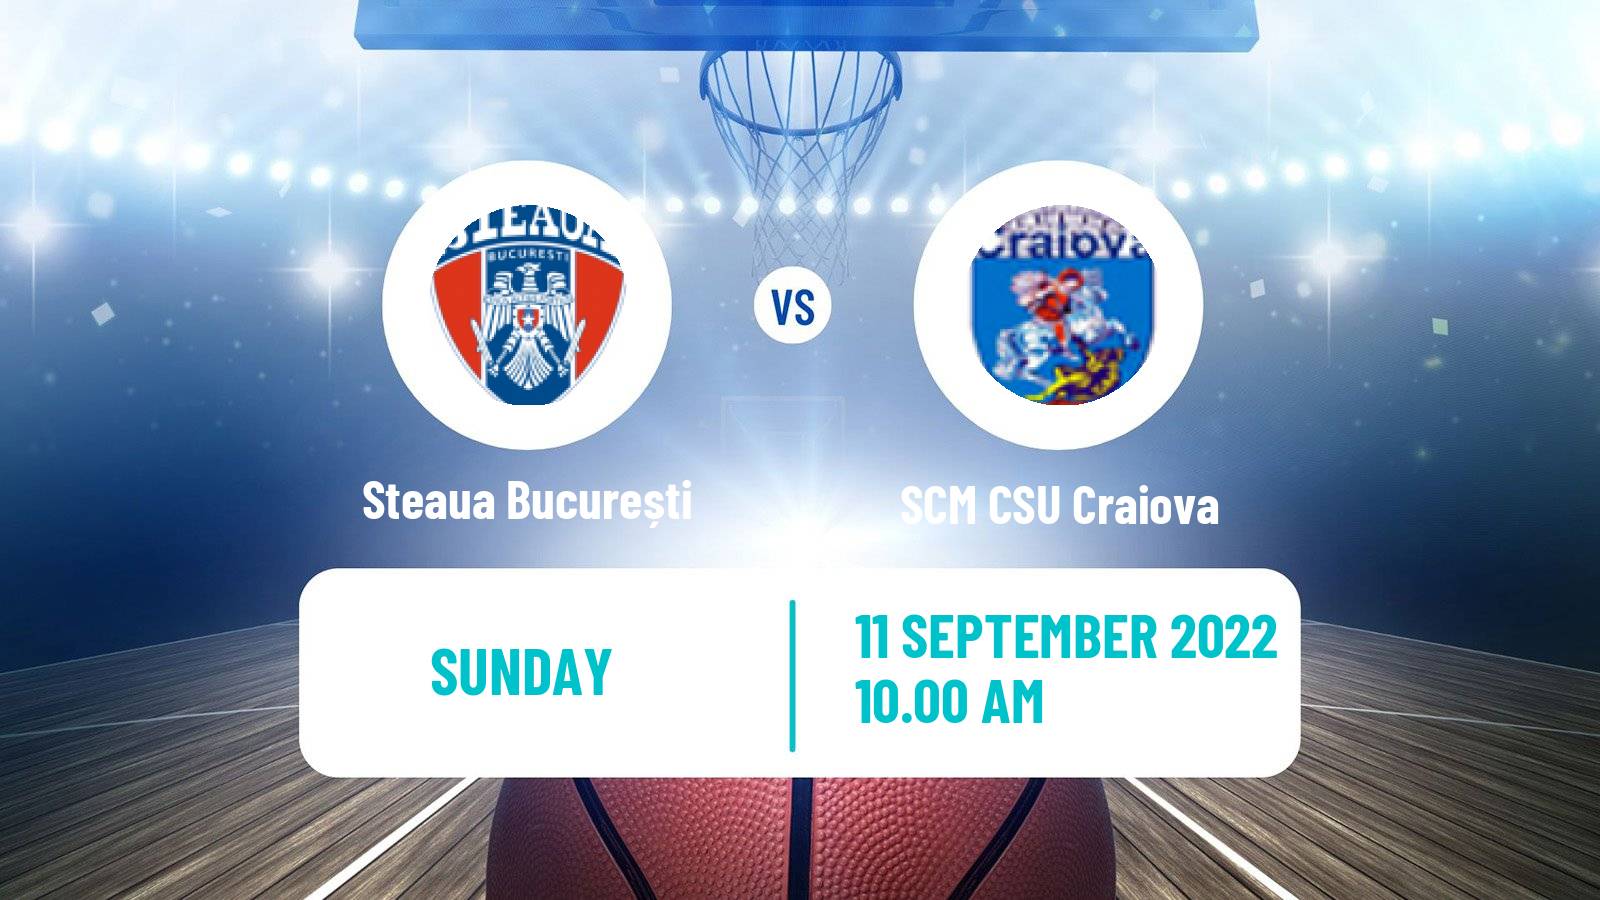 Basketball Club Friendly Basketball Steaua București - SCM CSU Craiova